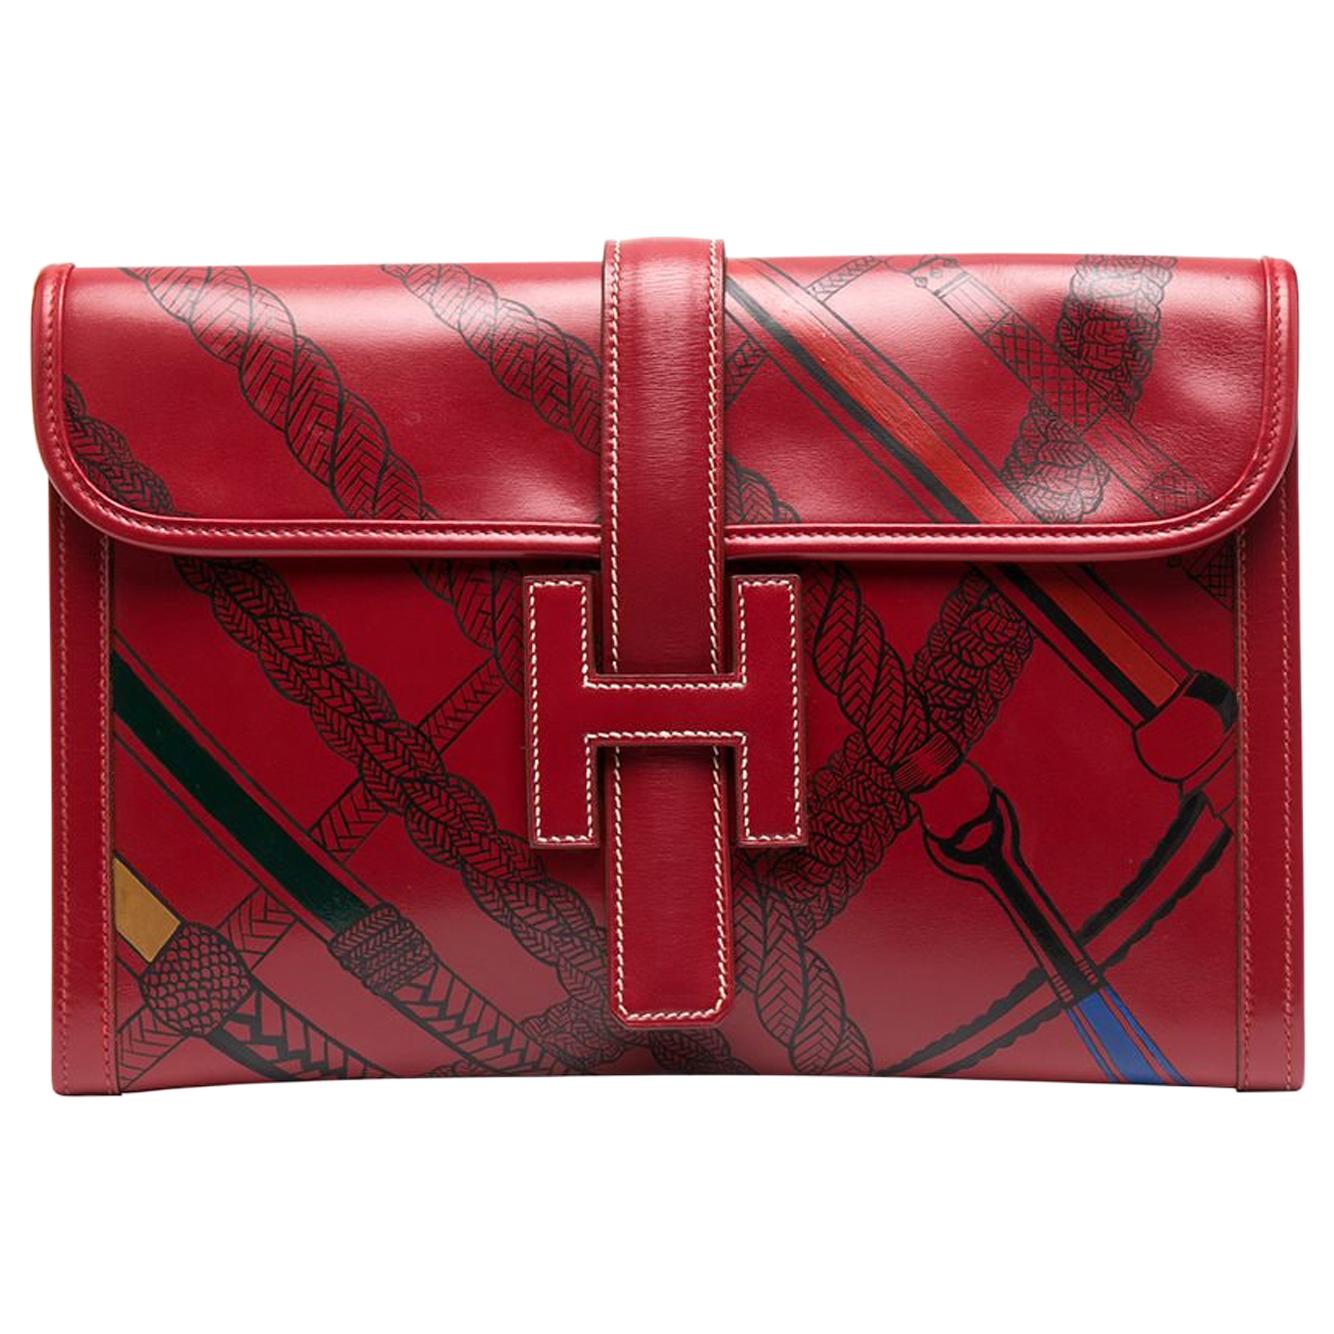 Hermès Jige Red Leather Clutch